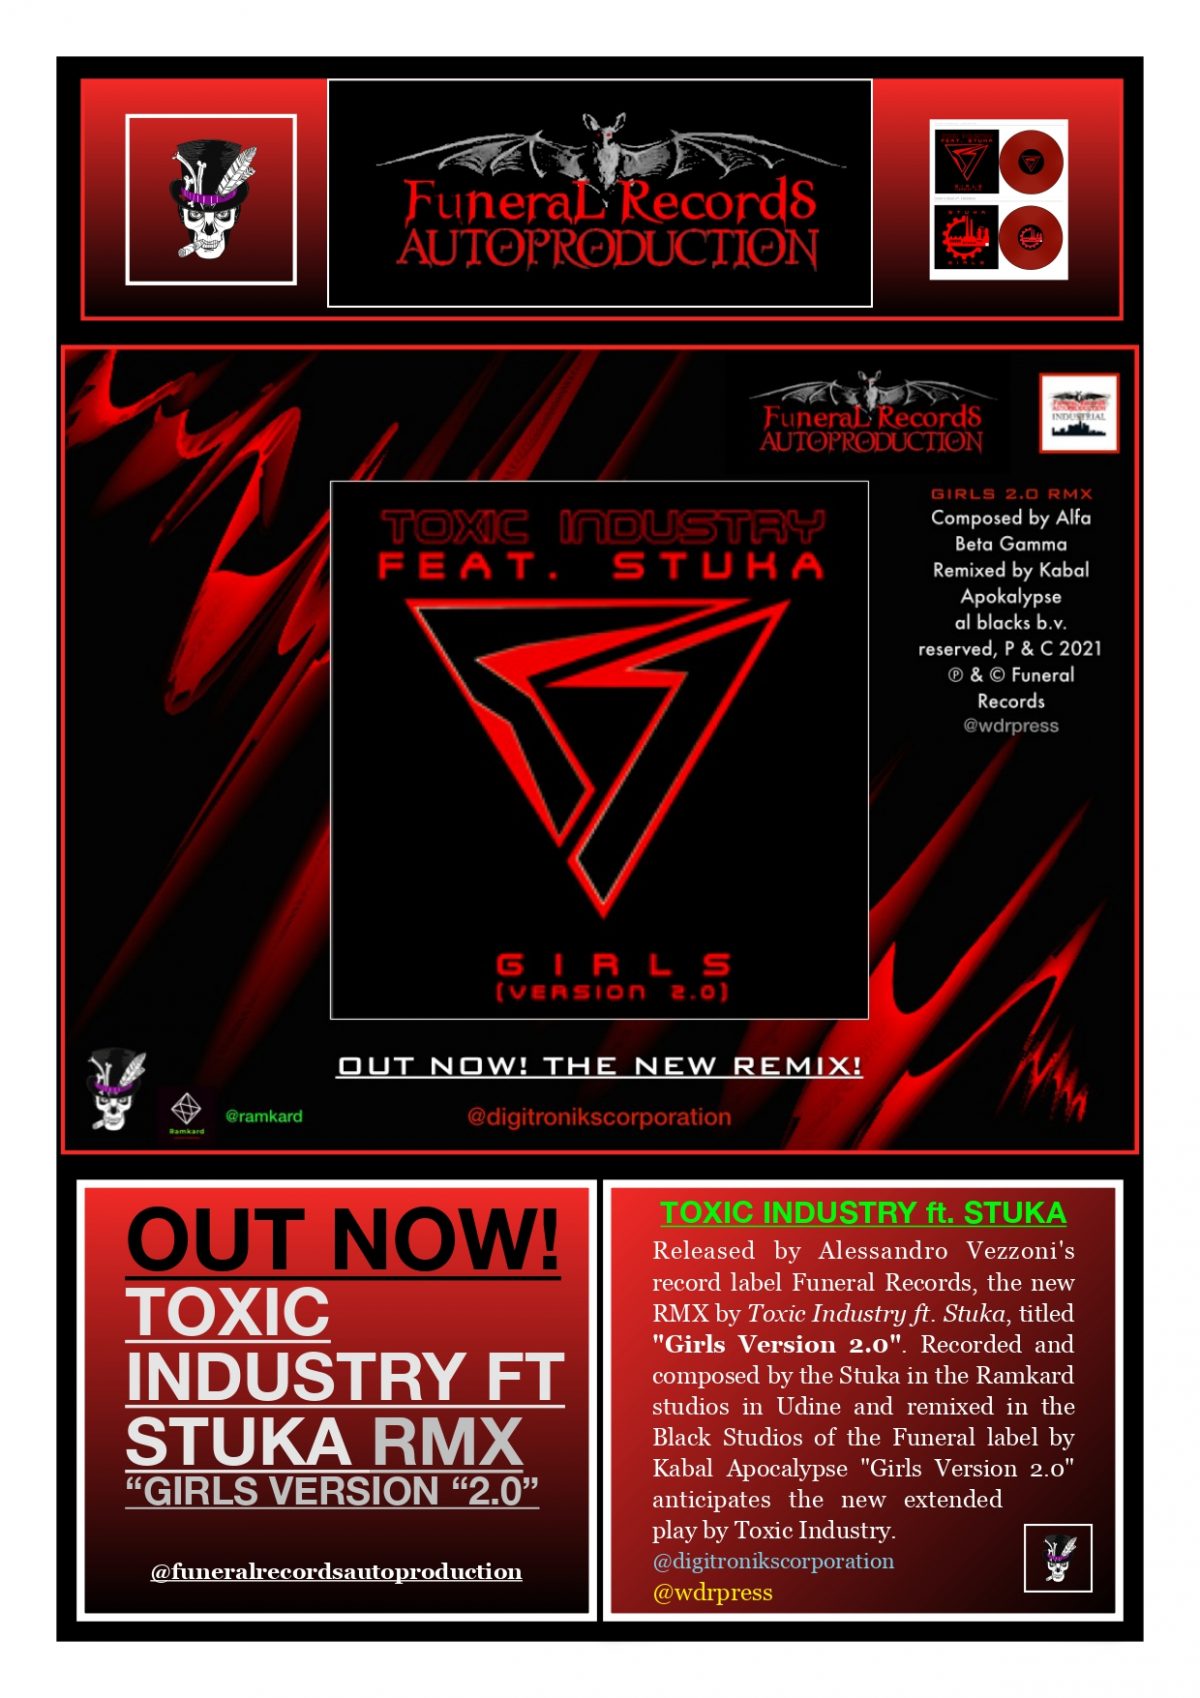 Fuori per Funeral Records “Girls Version 2.0” dei Toxic Industry ft. Stuka!